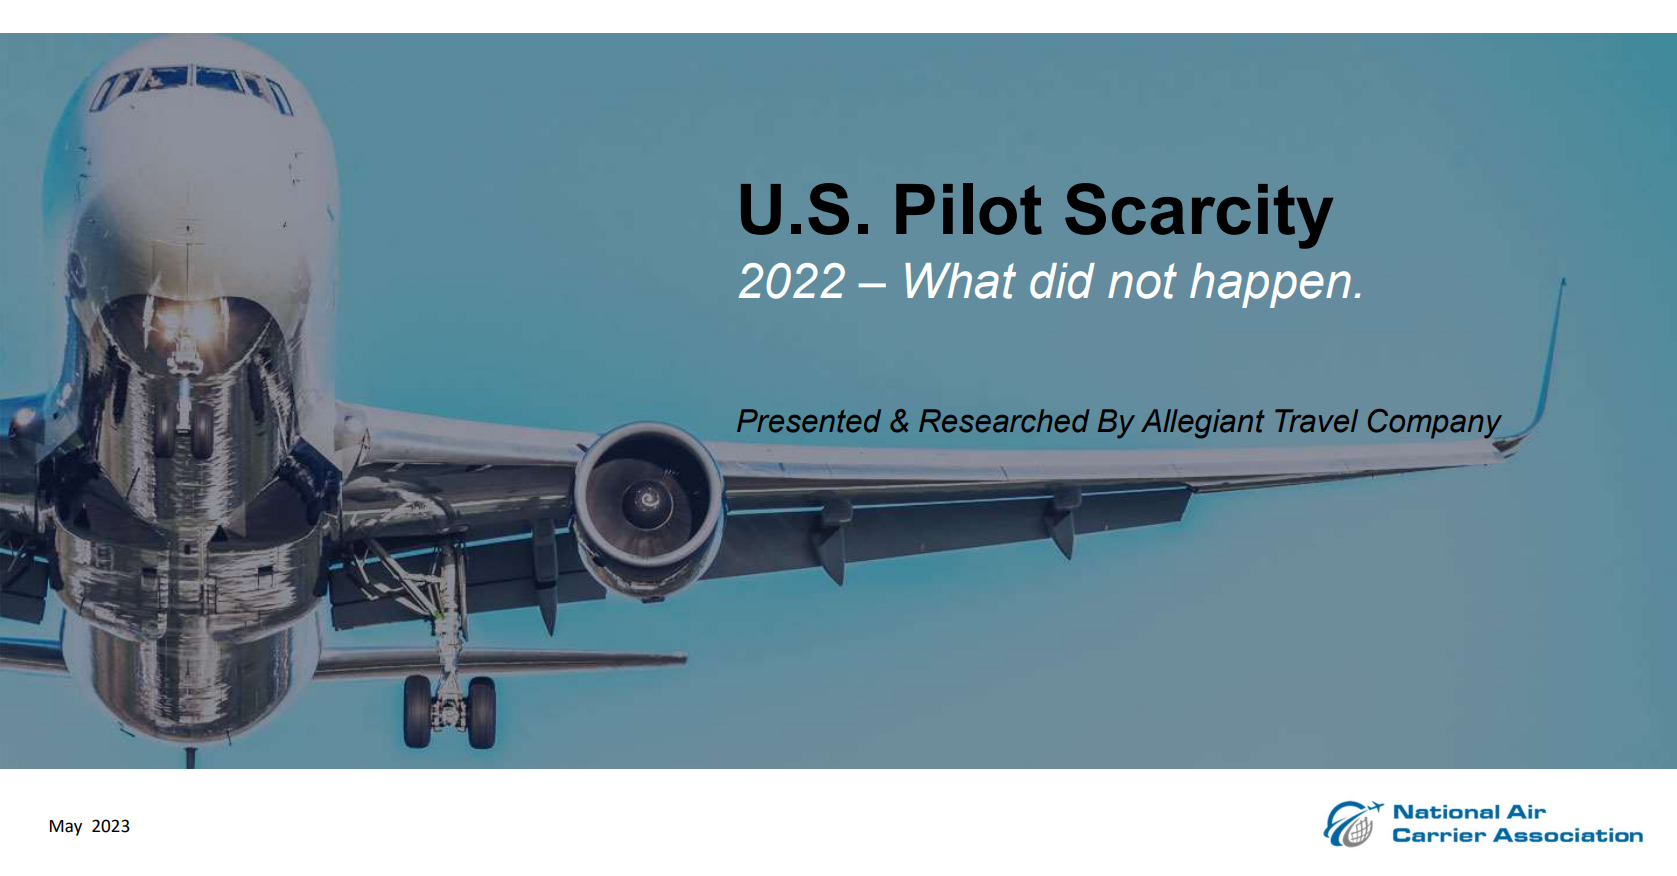 May 2023 Pilot Scarcity Update